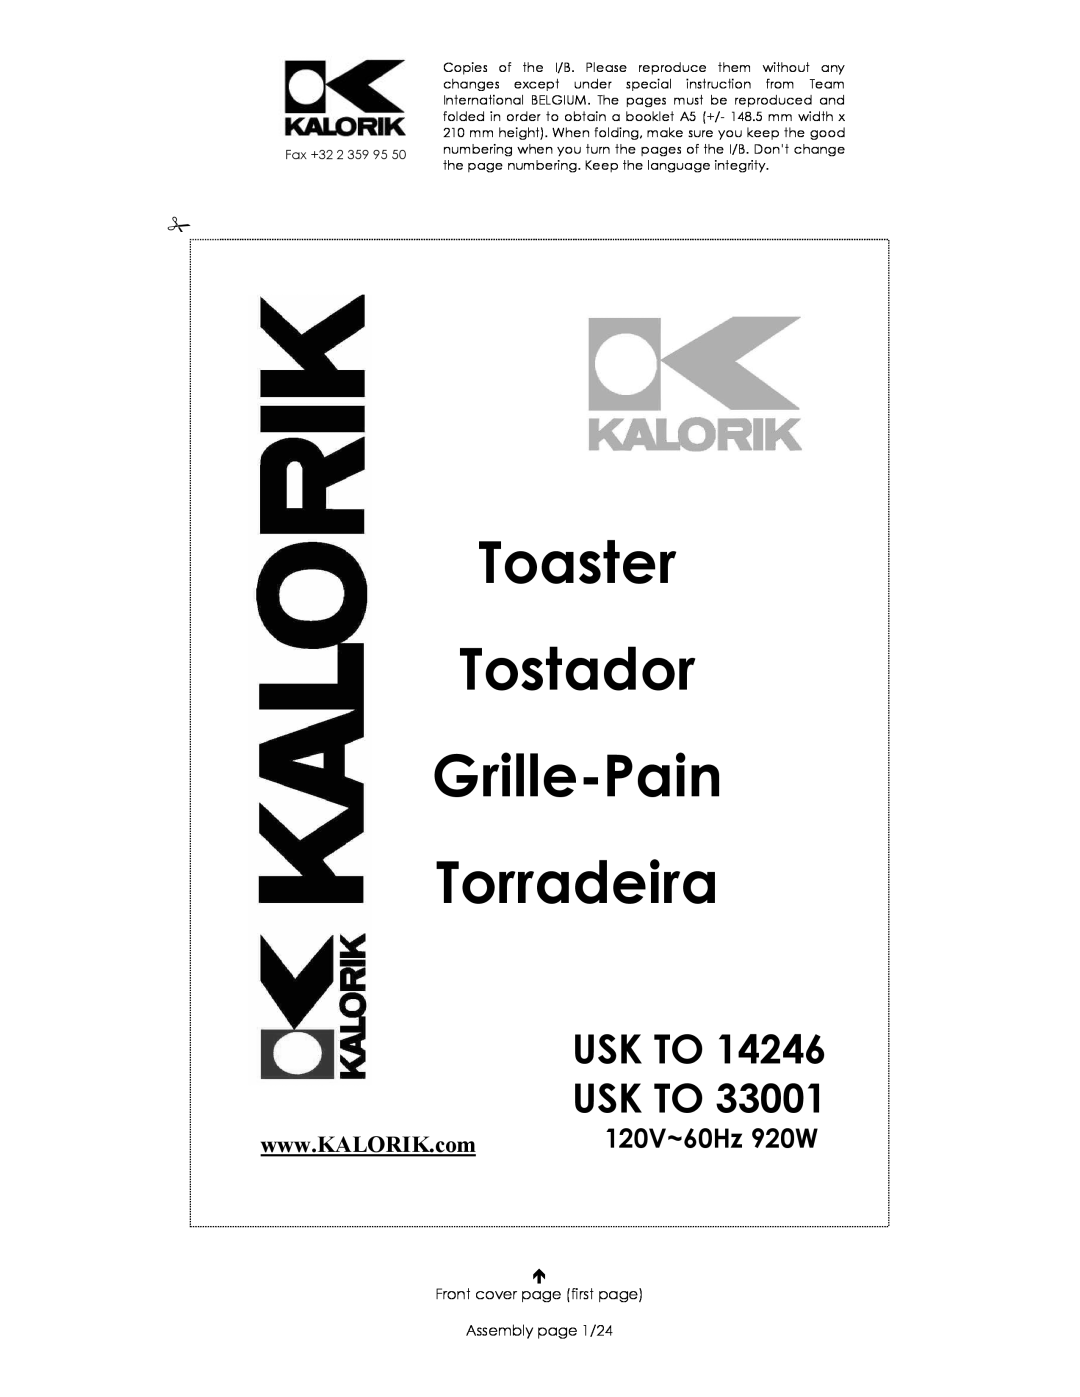 Kalorik 14246 - 33001 manual 120V~60Hz 920W, Toaster Tostador Grille-Pain Torradeira, Usk To 